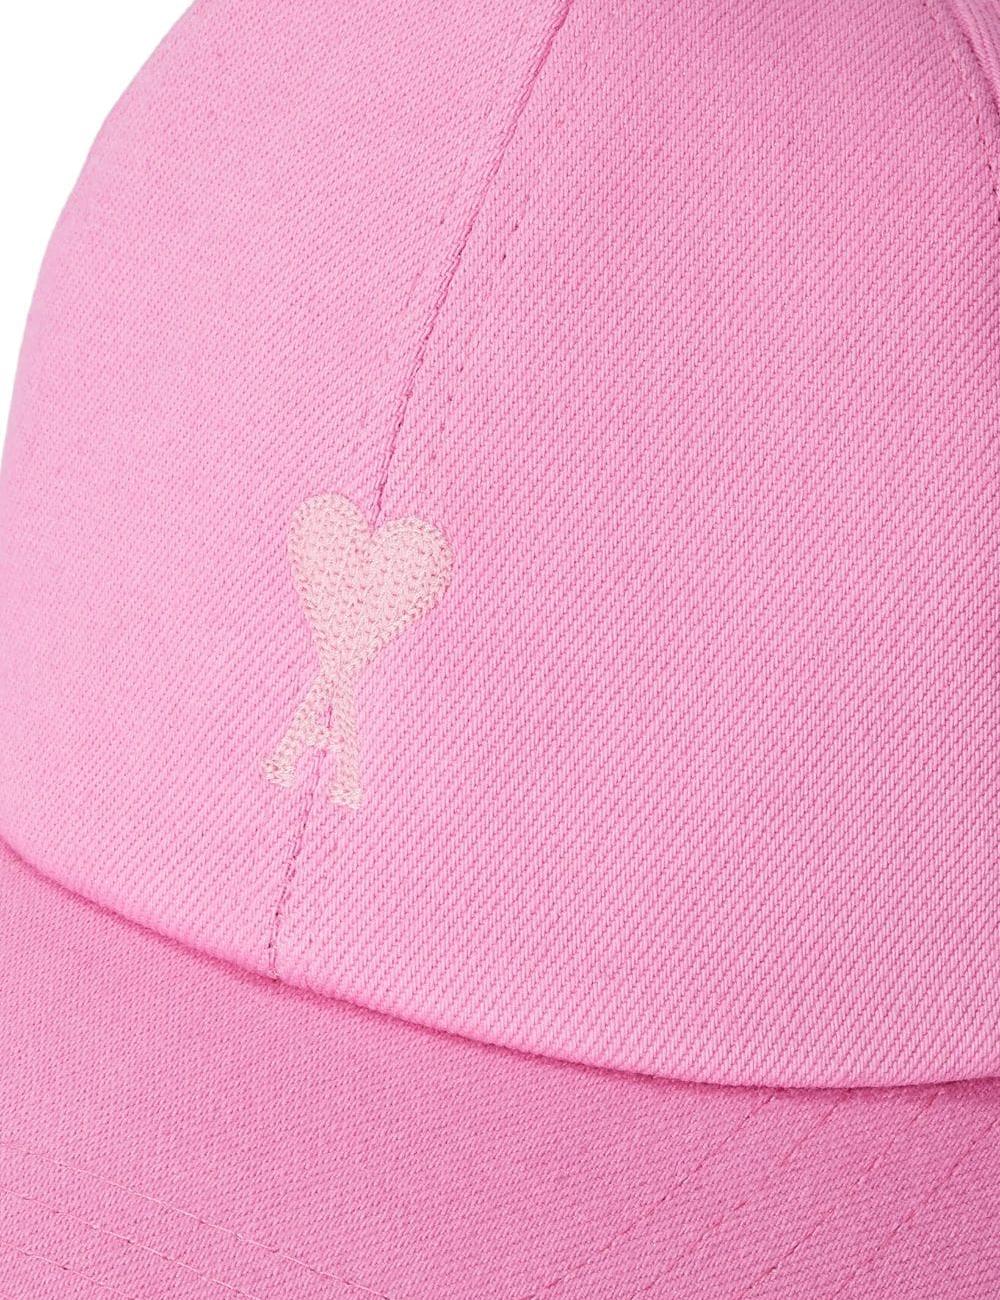 ADC heart logo embroidered baseball cap